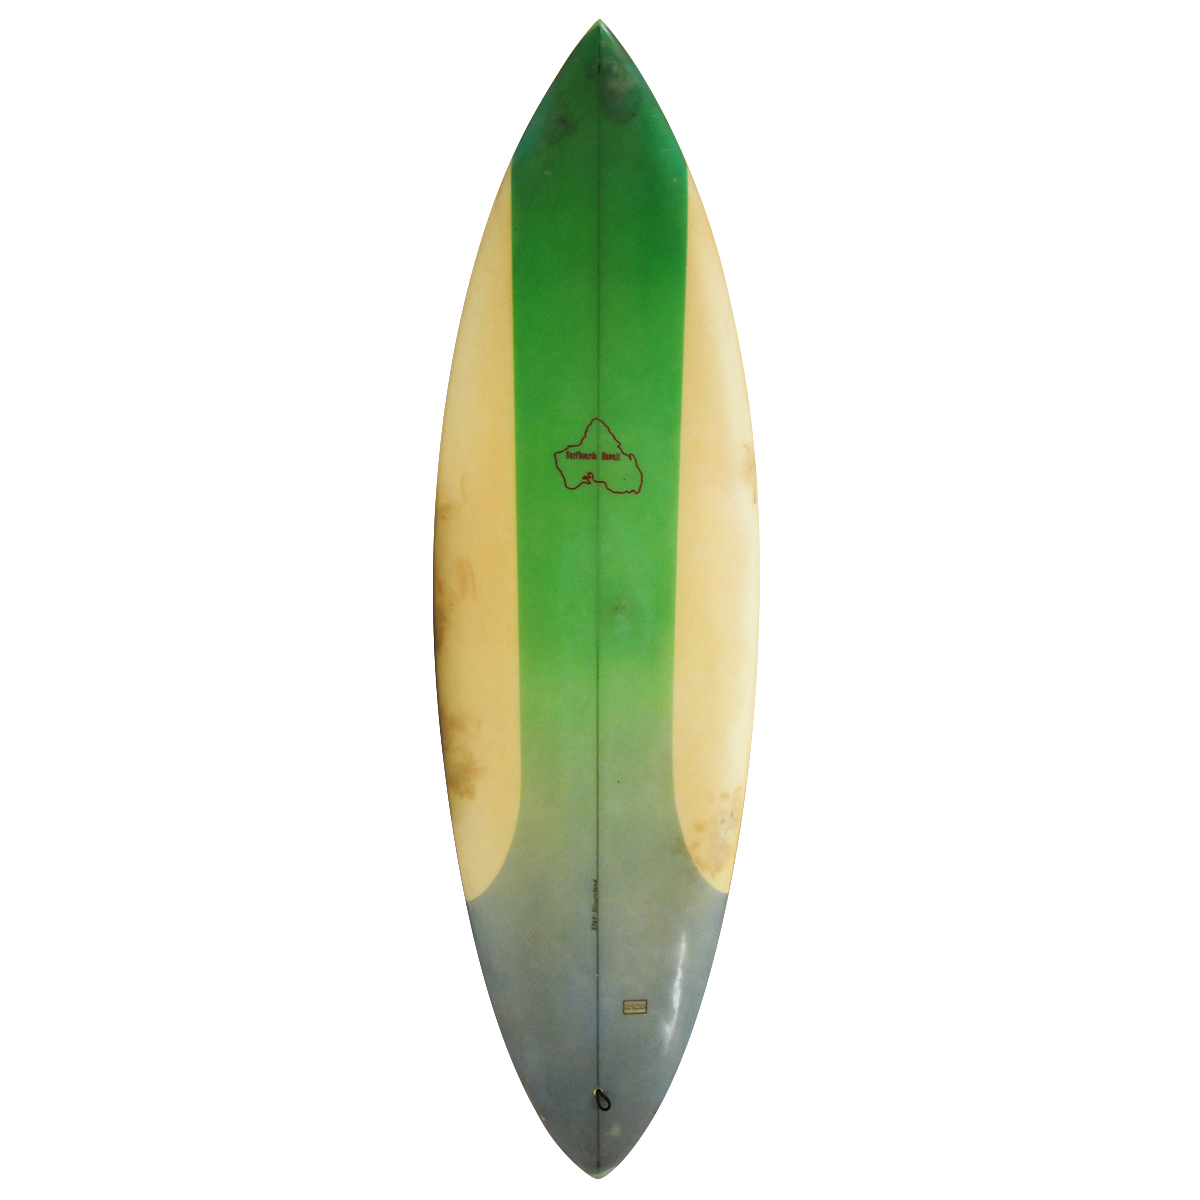  / SURFBOARDS HAWAII / HYDRO SINGLE 5`10 shaped by Mike Slingerland